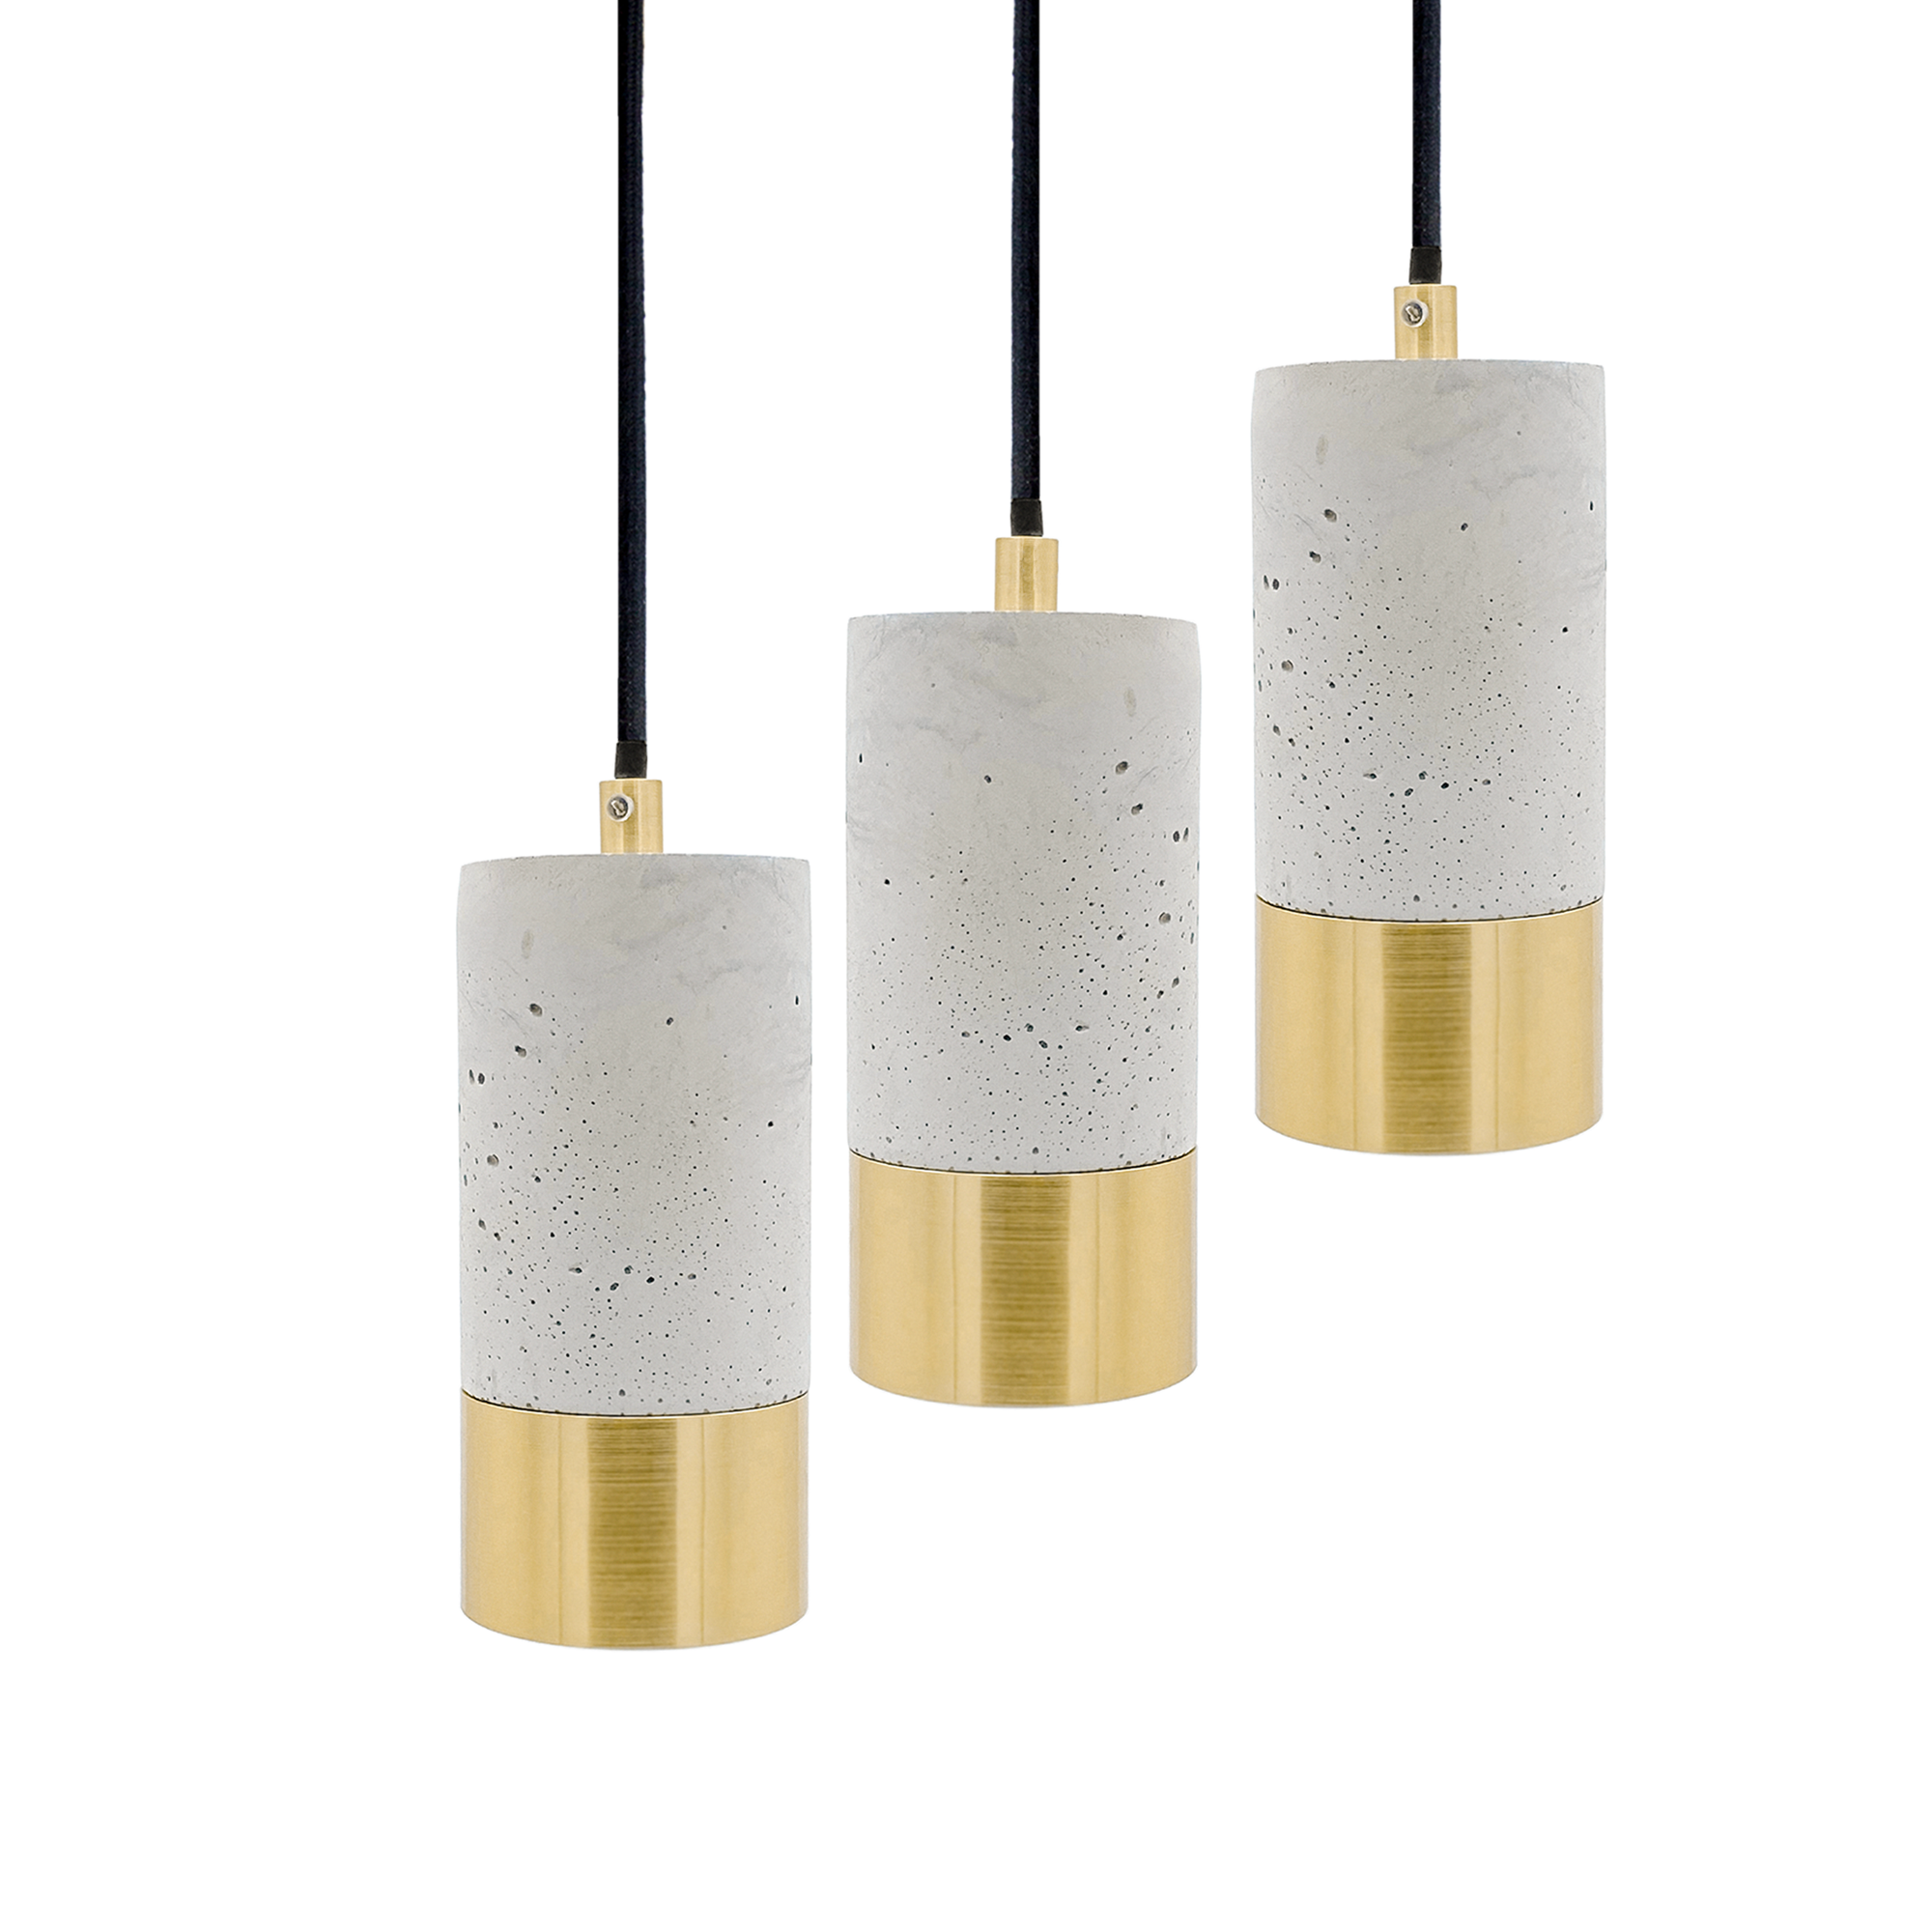 Concrete Lighting Brass - Set of 3